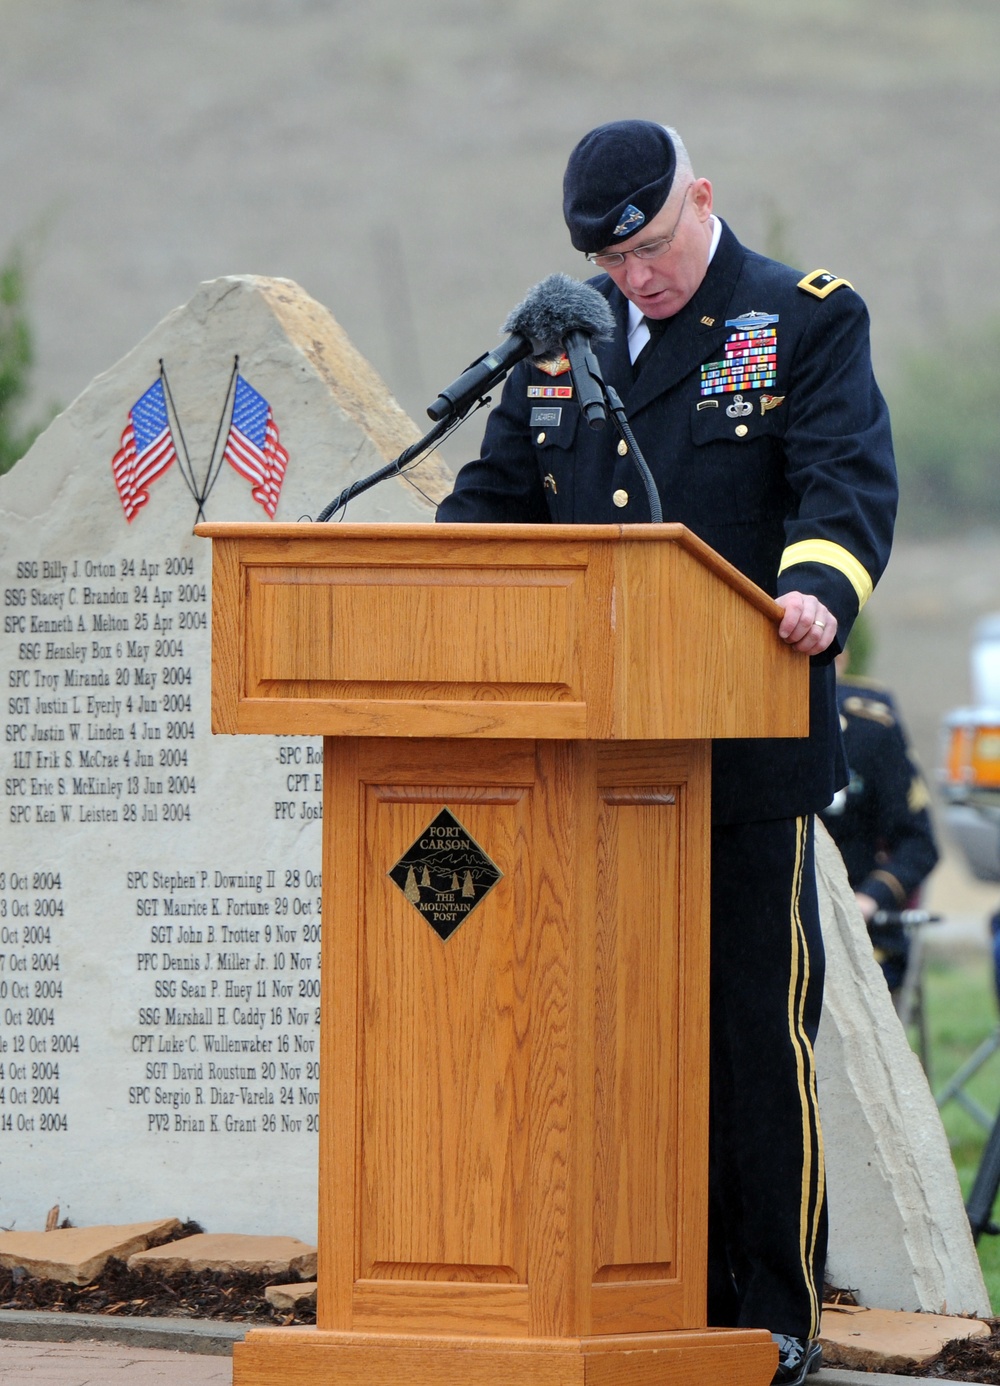 Memorial remarks